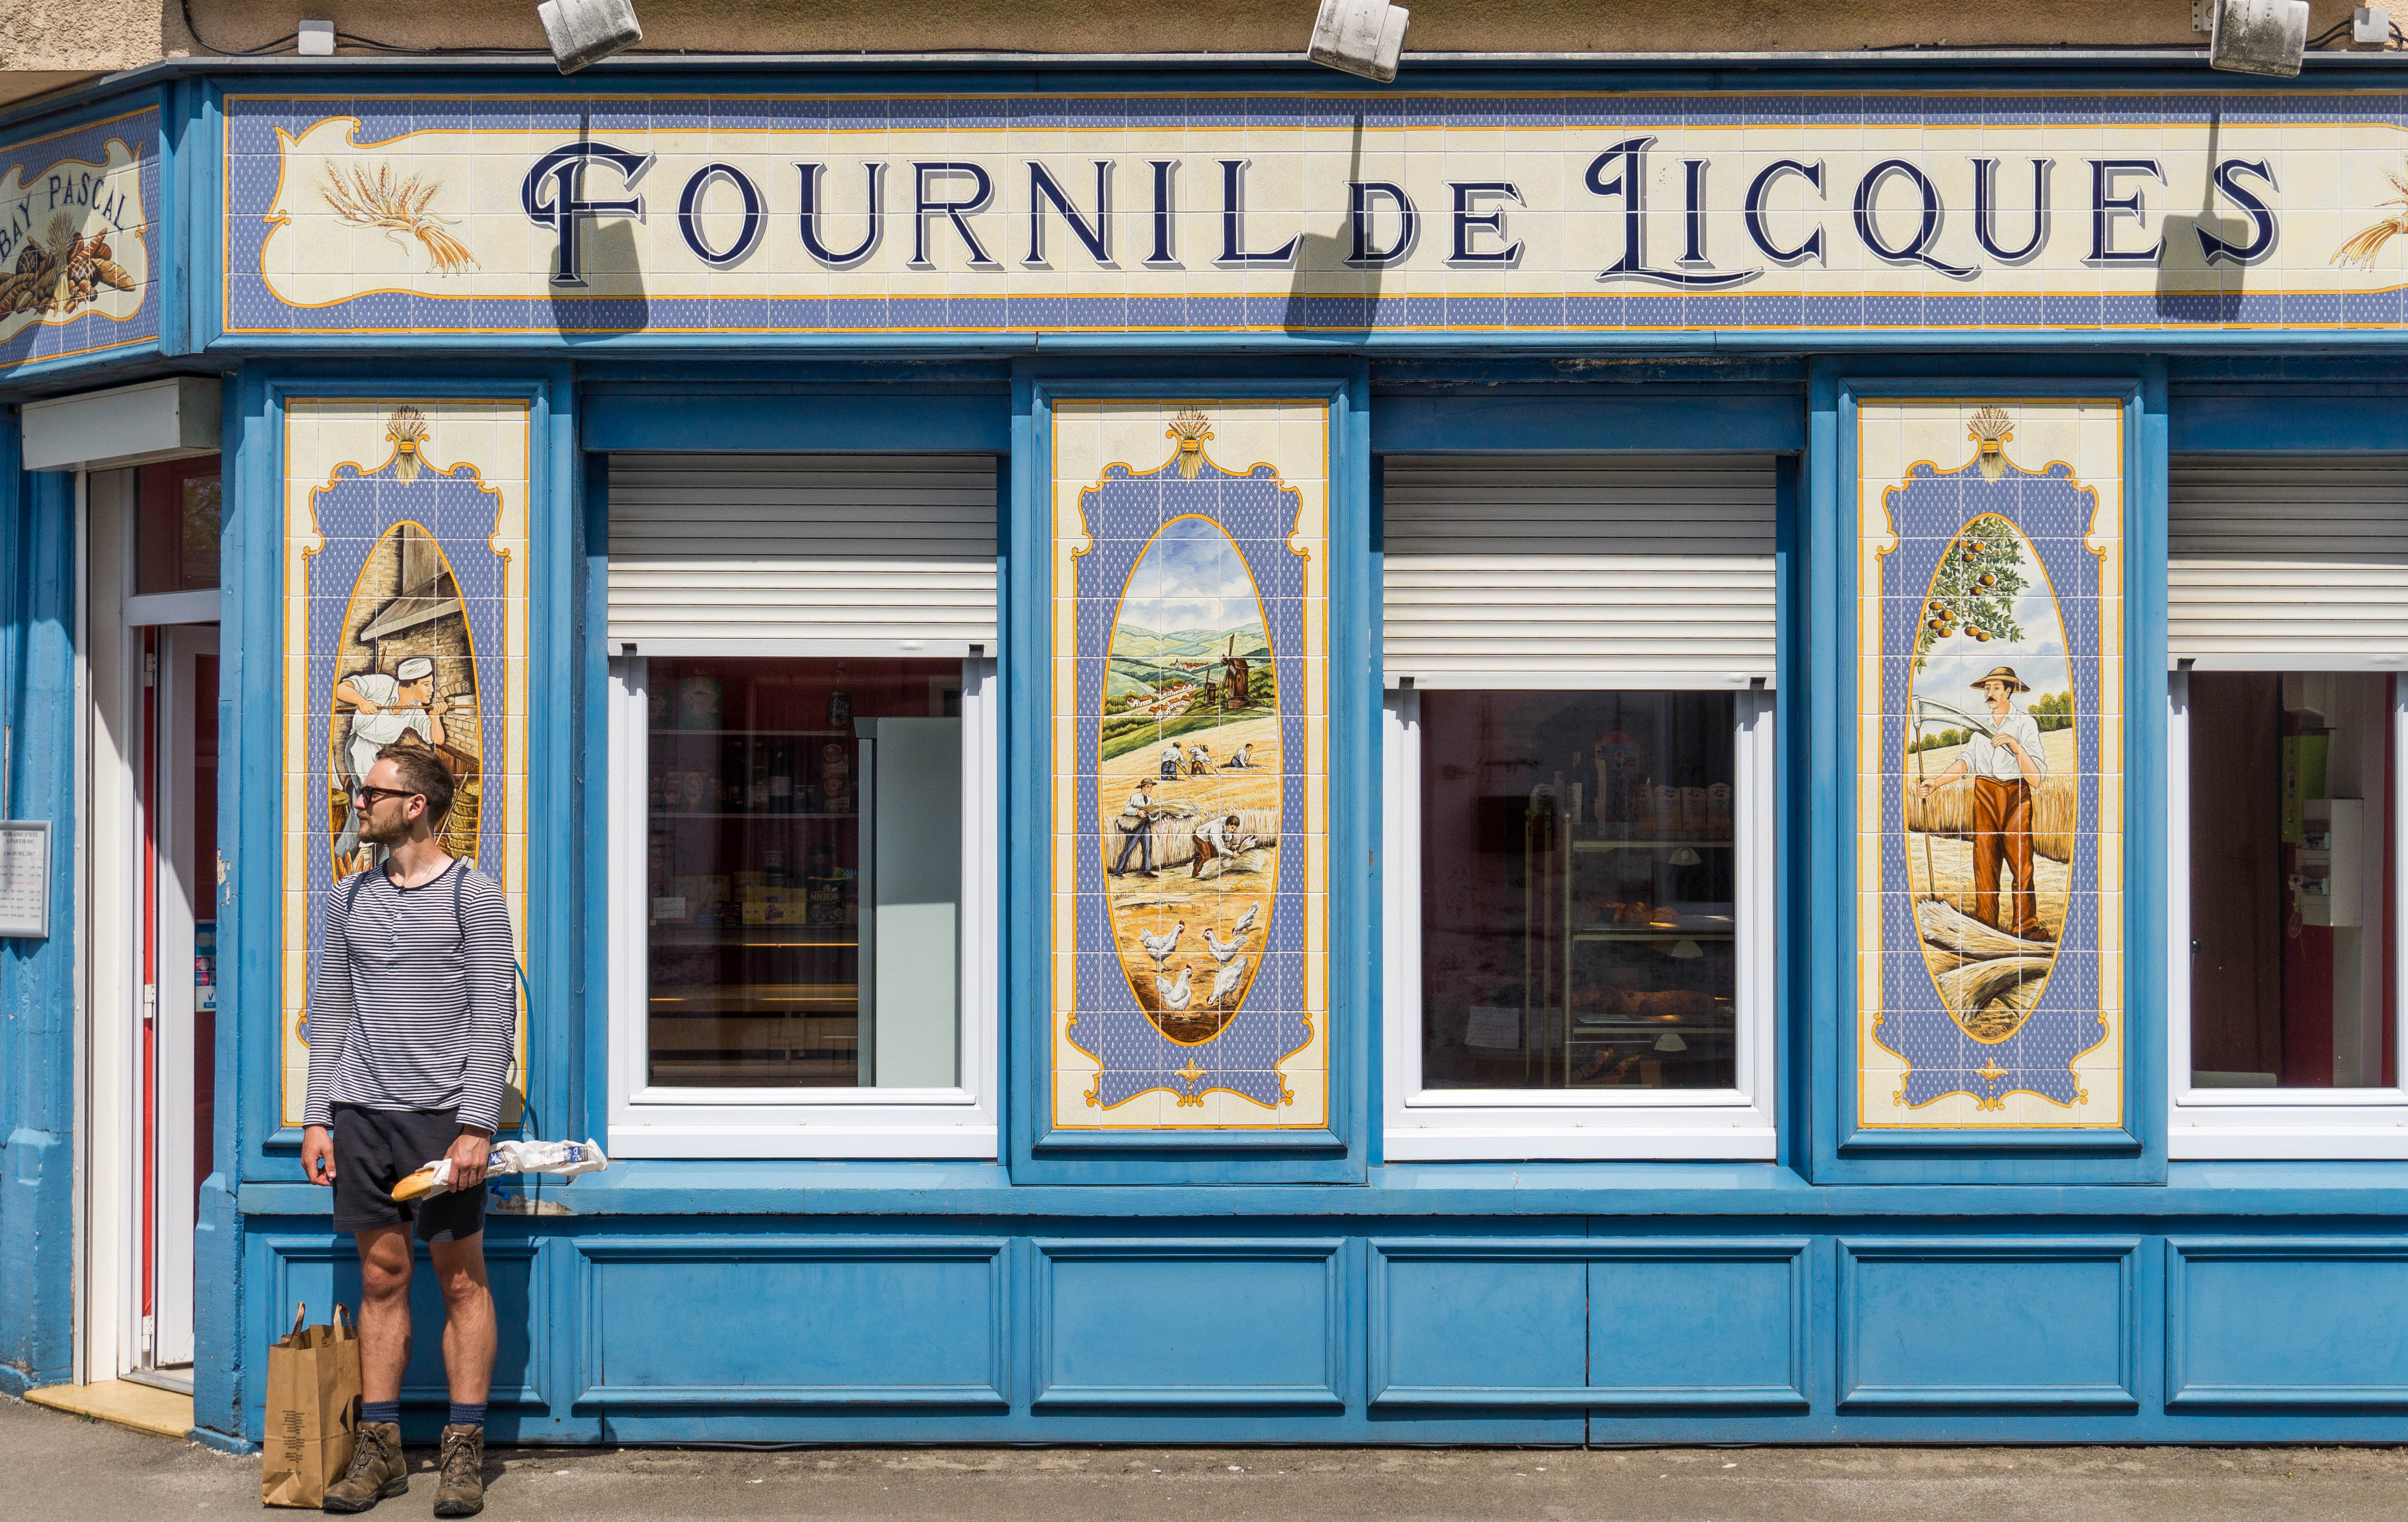 Via Francigena rest day in Pas-de-Calais, France involves visits to a local bakery